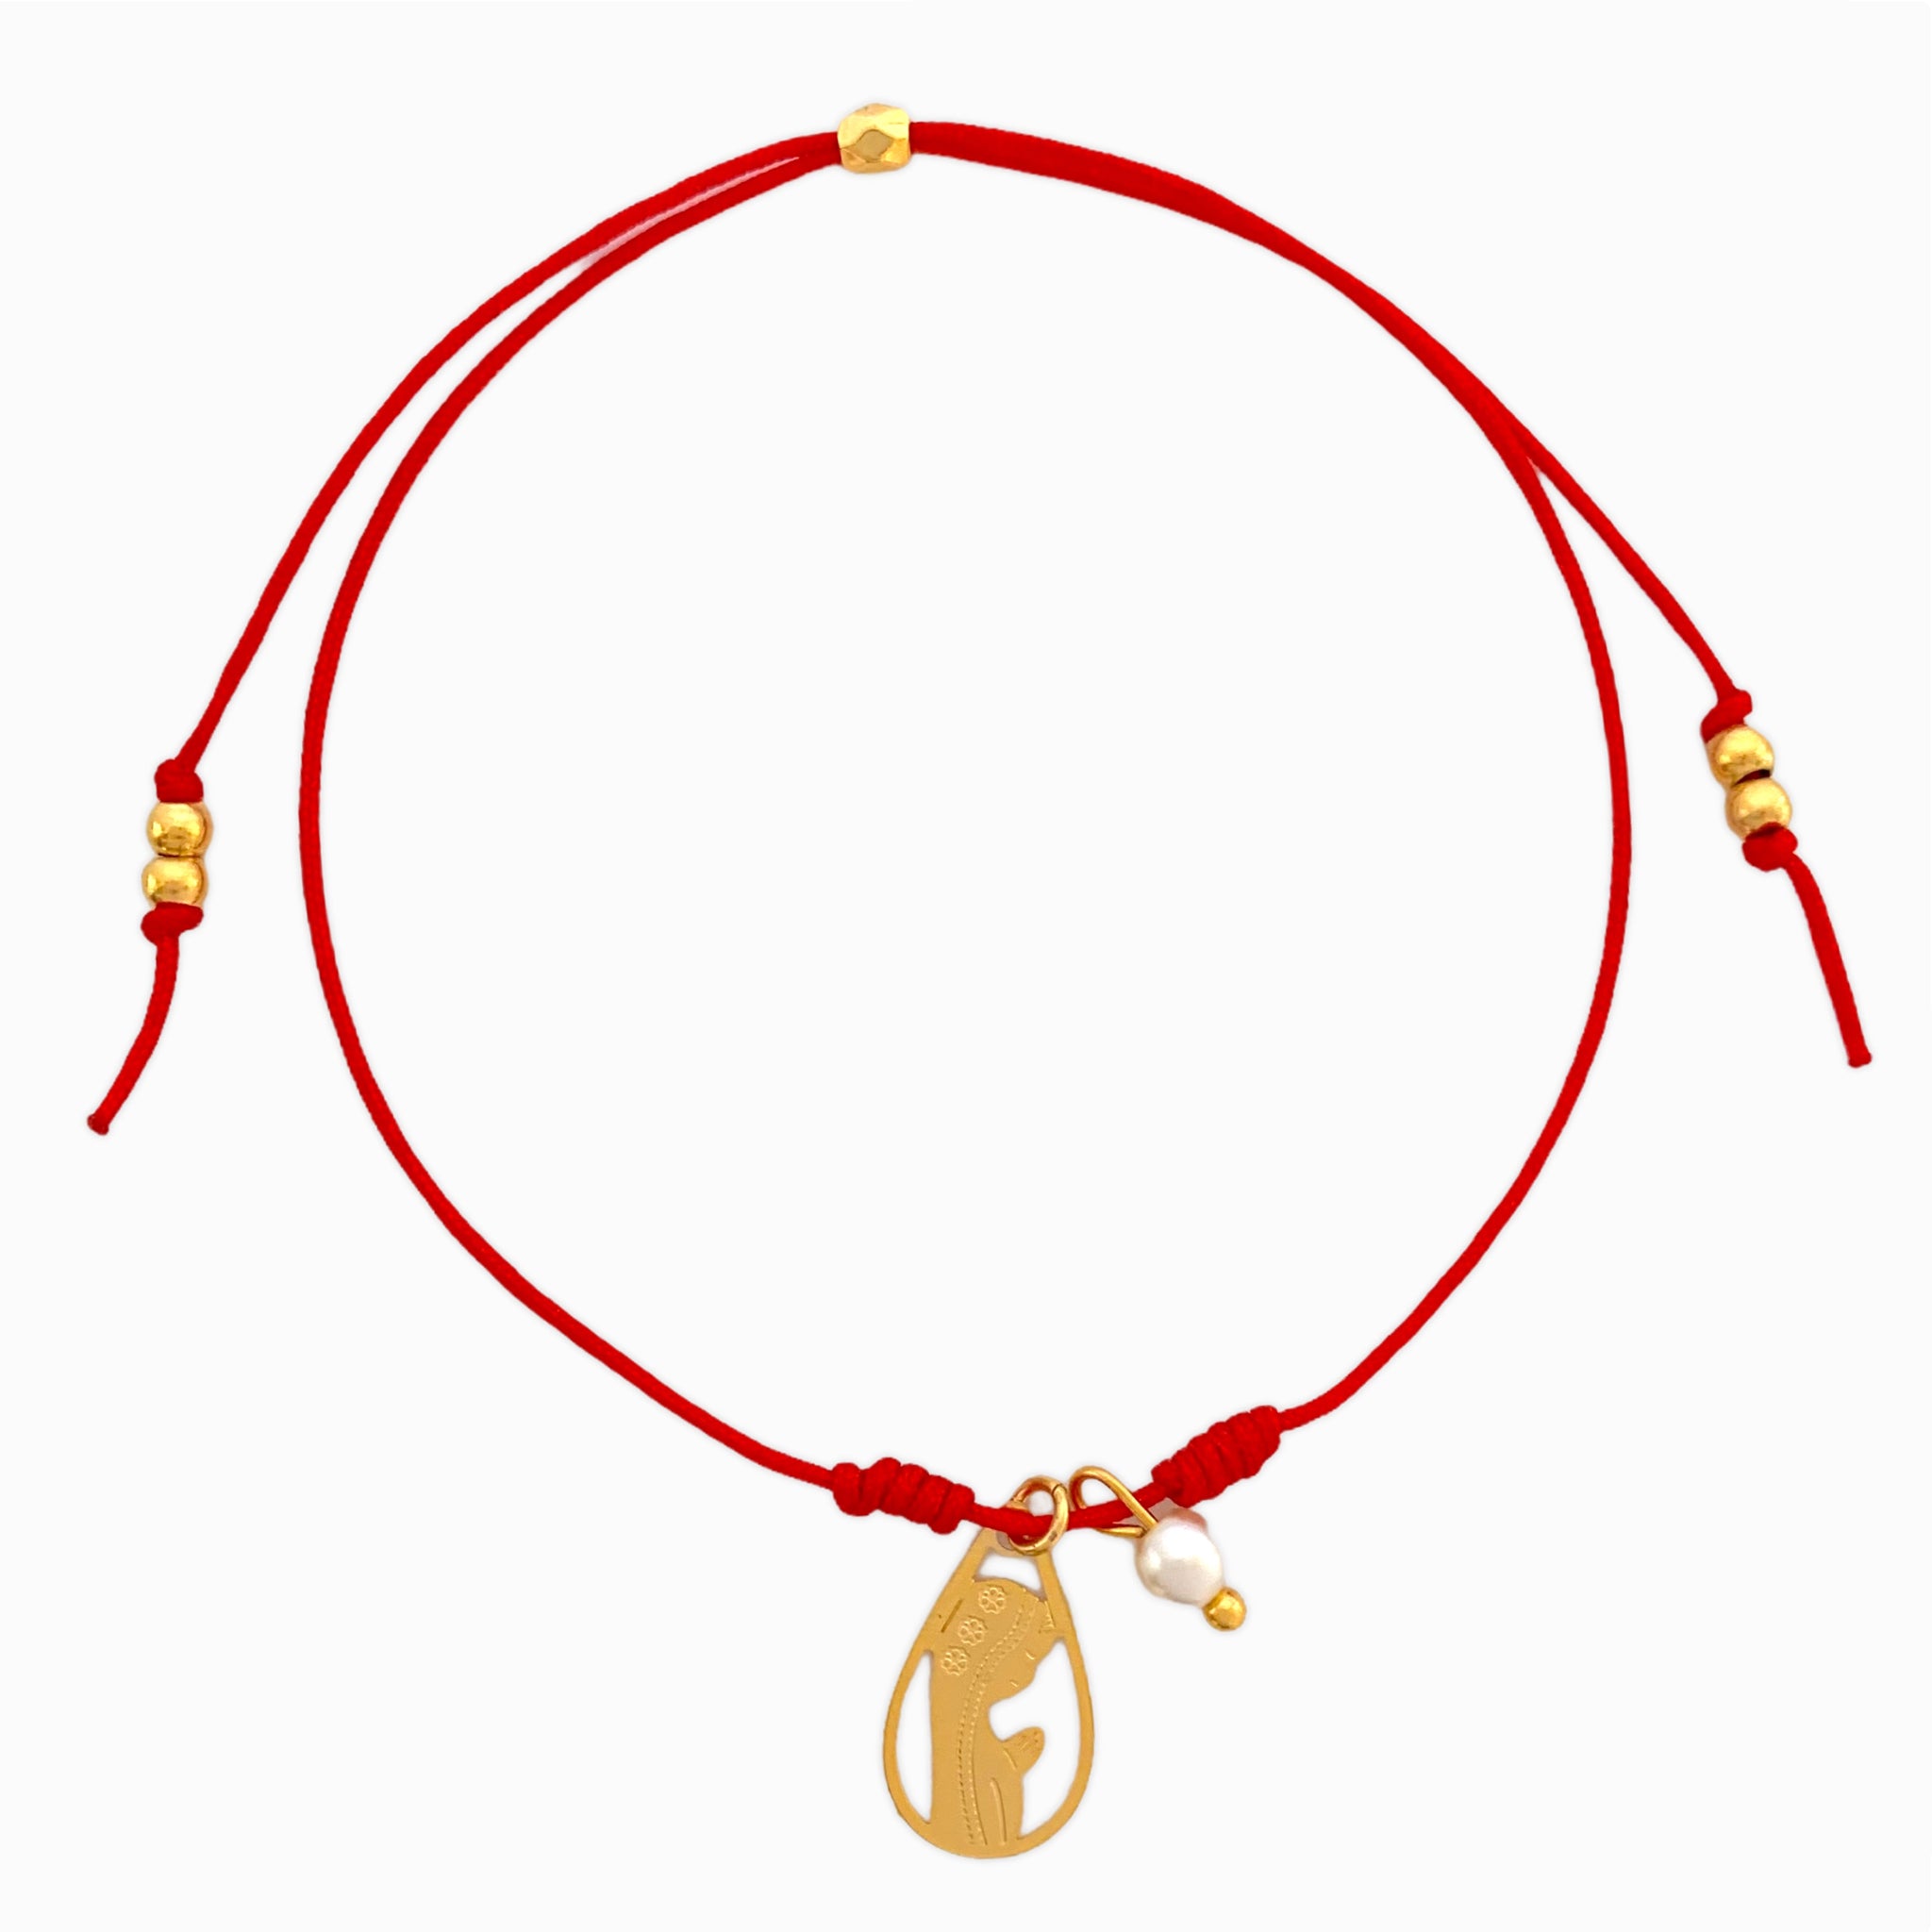 Virgin Mary Bracelet with Yarn